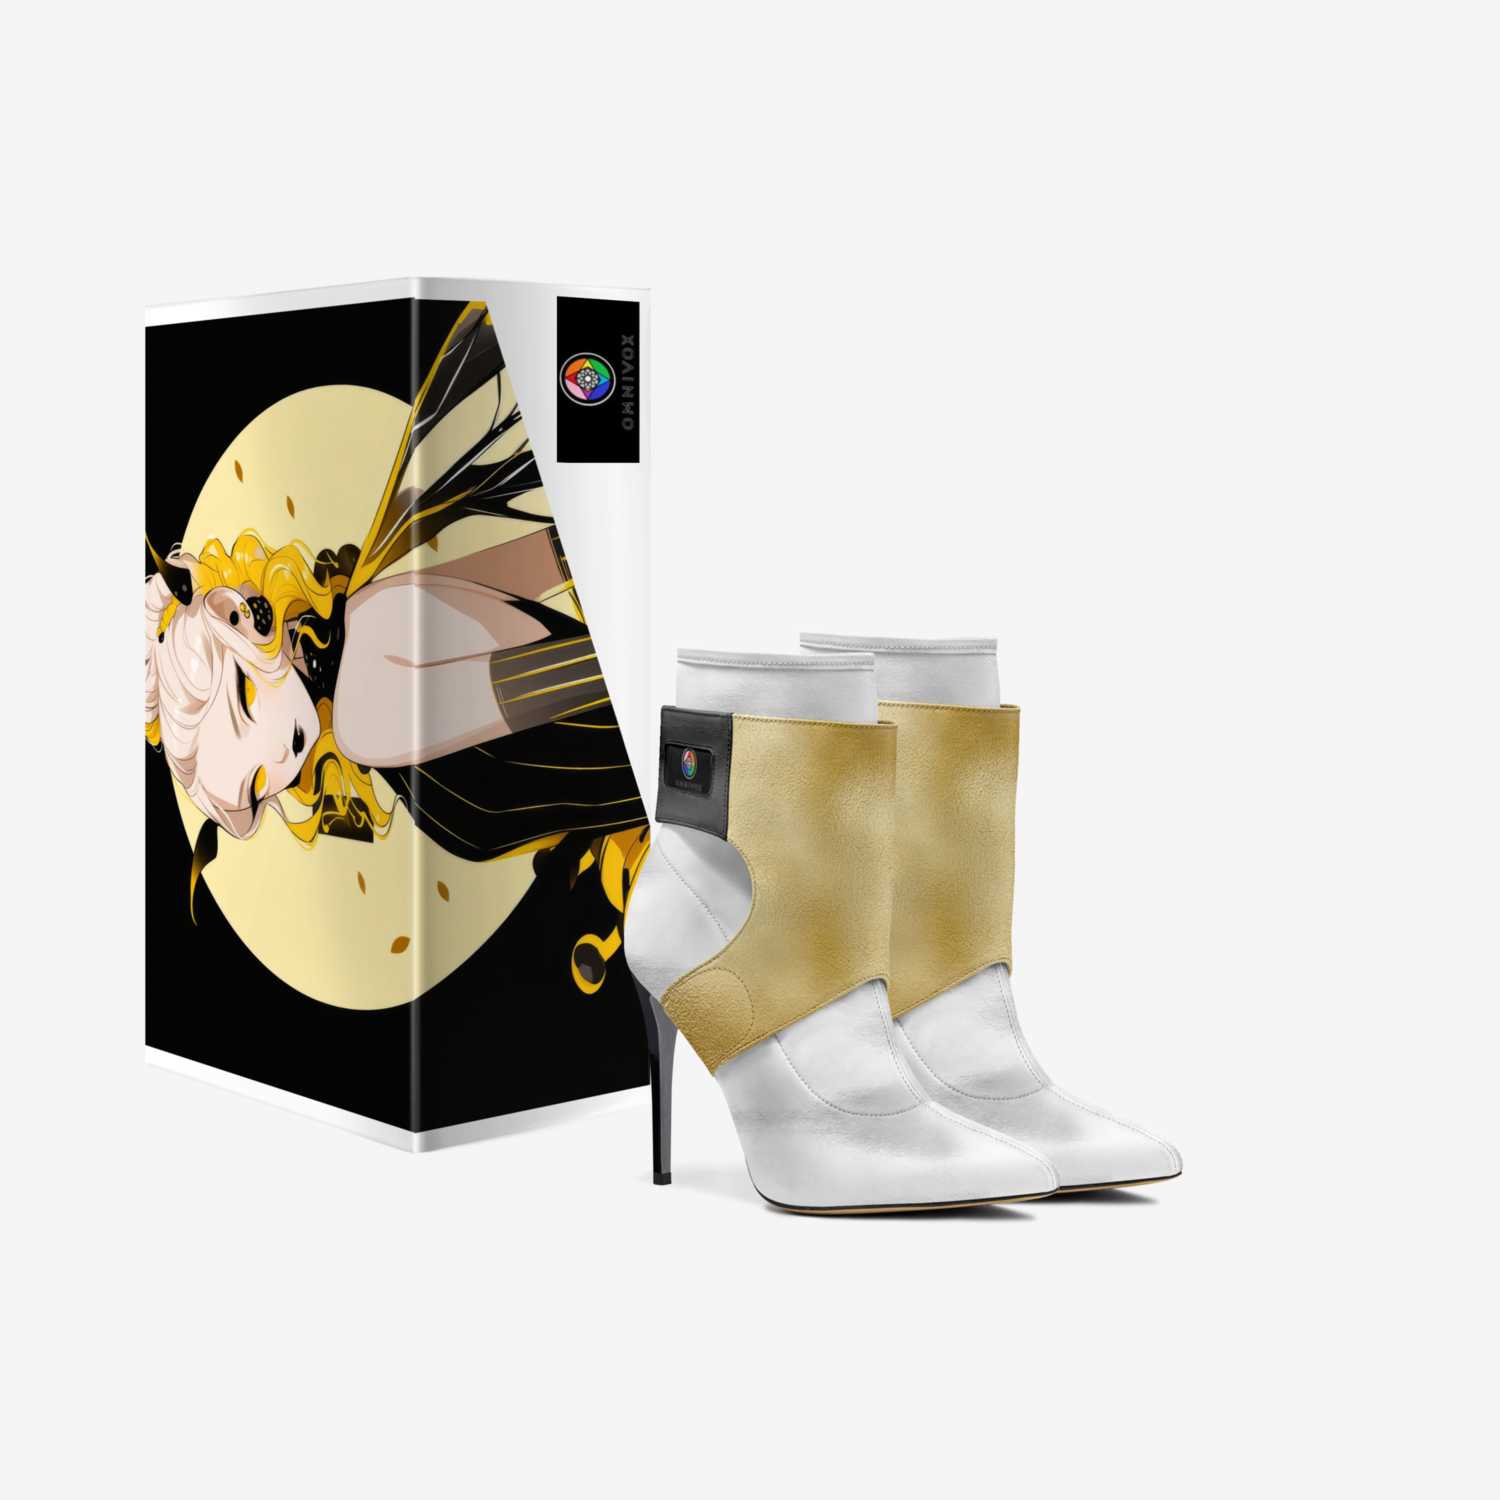 Ozunugami custom made in Italy shoes by Ava Marenazul | Box view